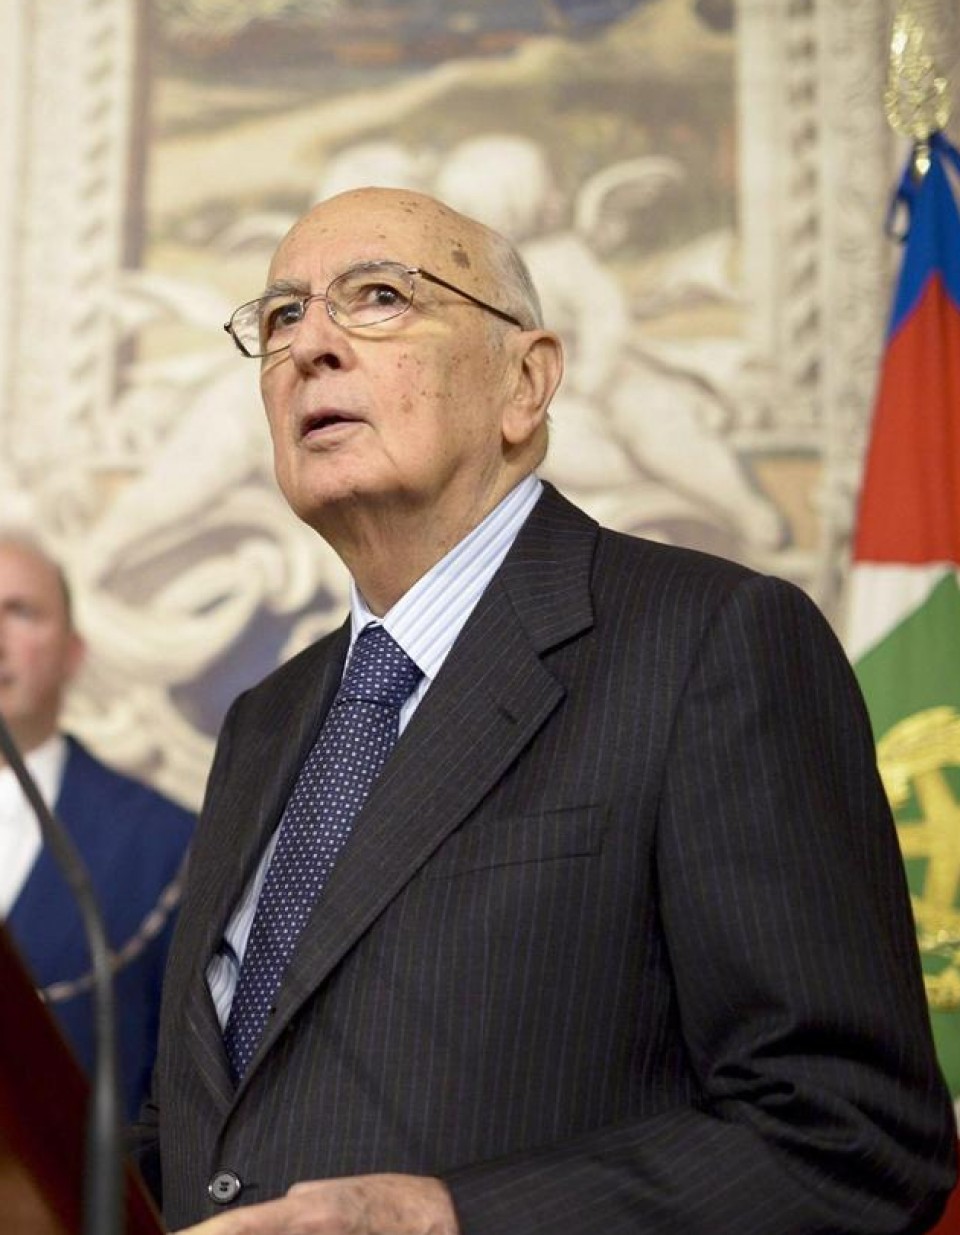 Dimite Giorgio Napolitano, presidente de la República de Italia